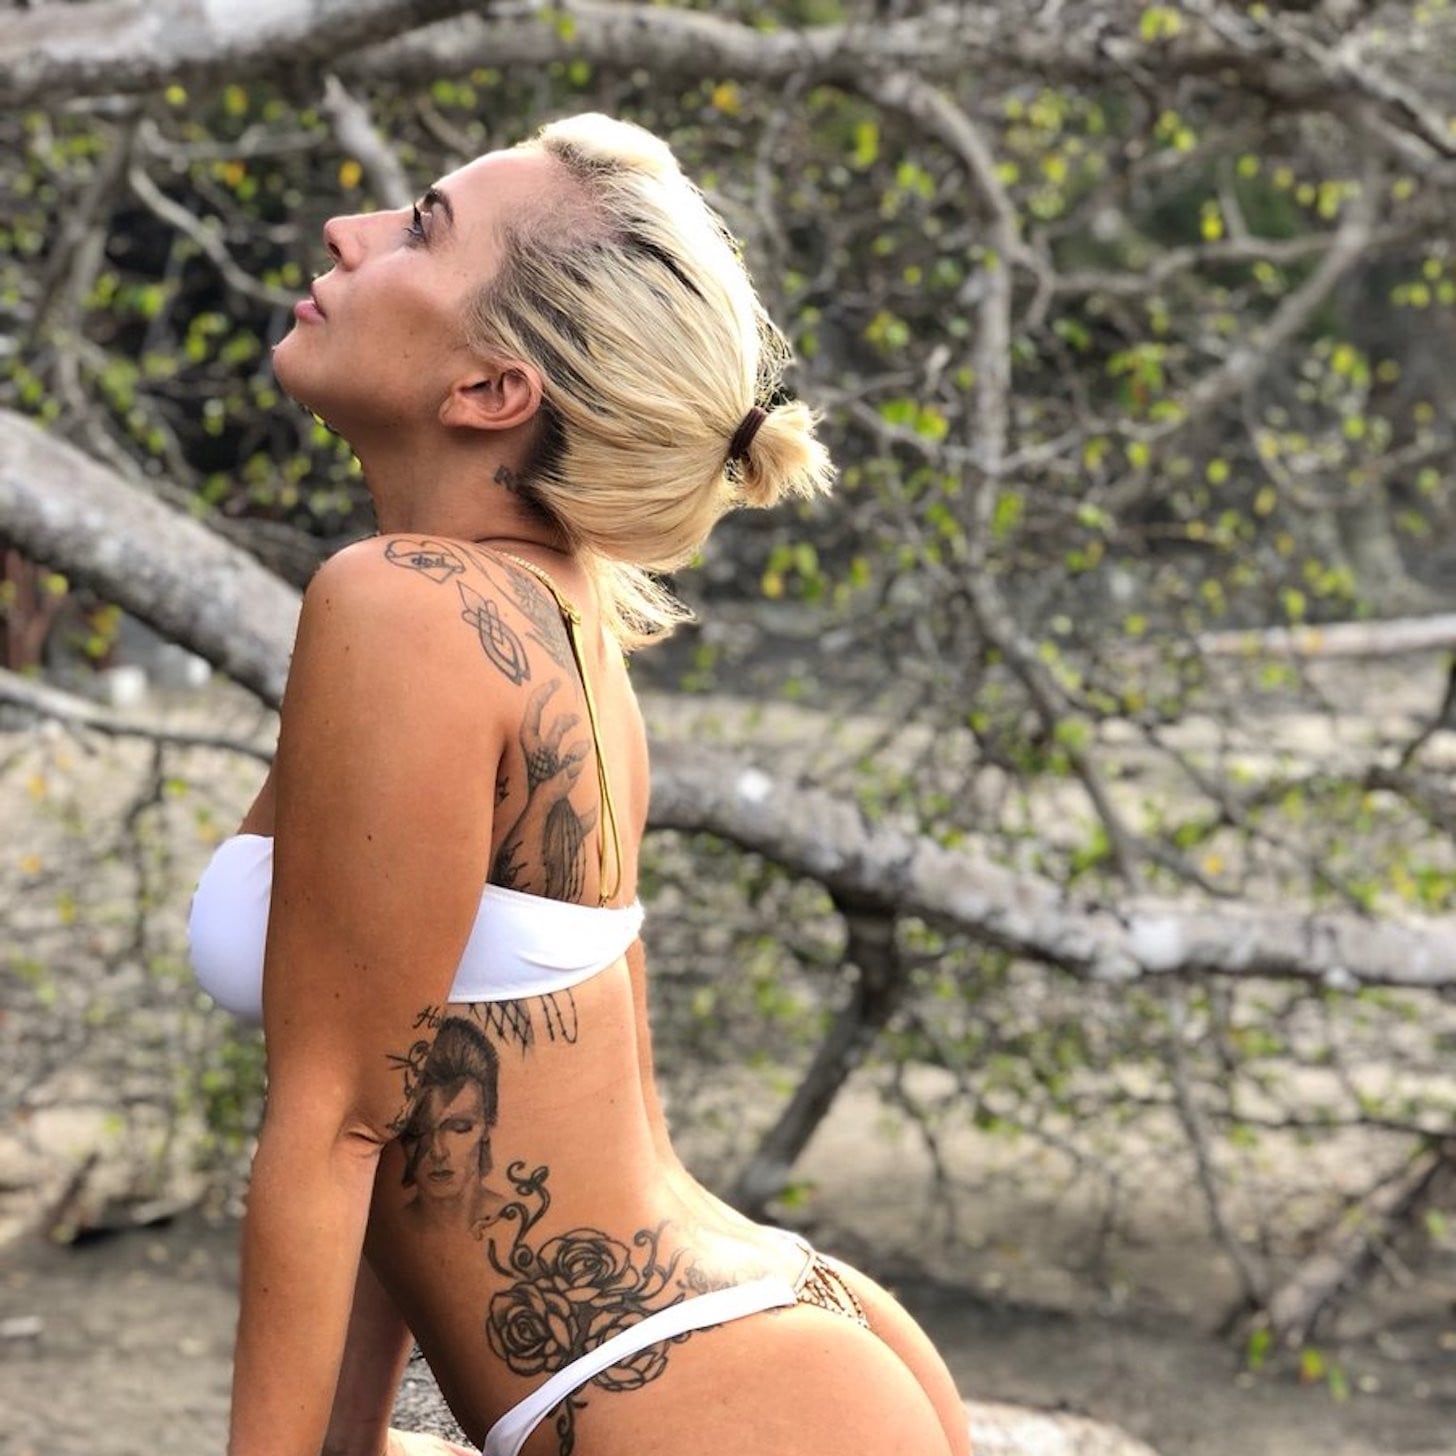 Lady Gaga Shows Off Her Curves in Sexy Thong Bikini Photos